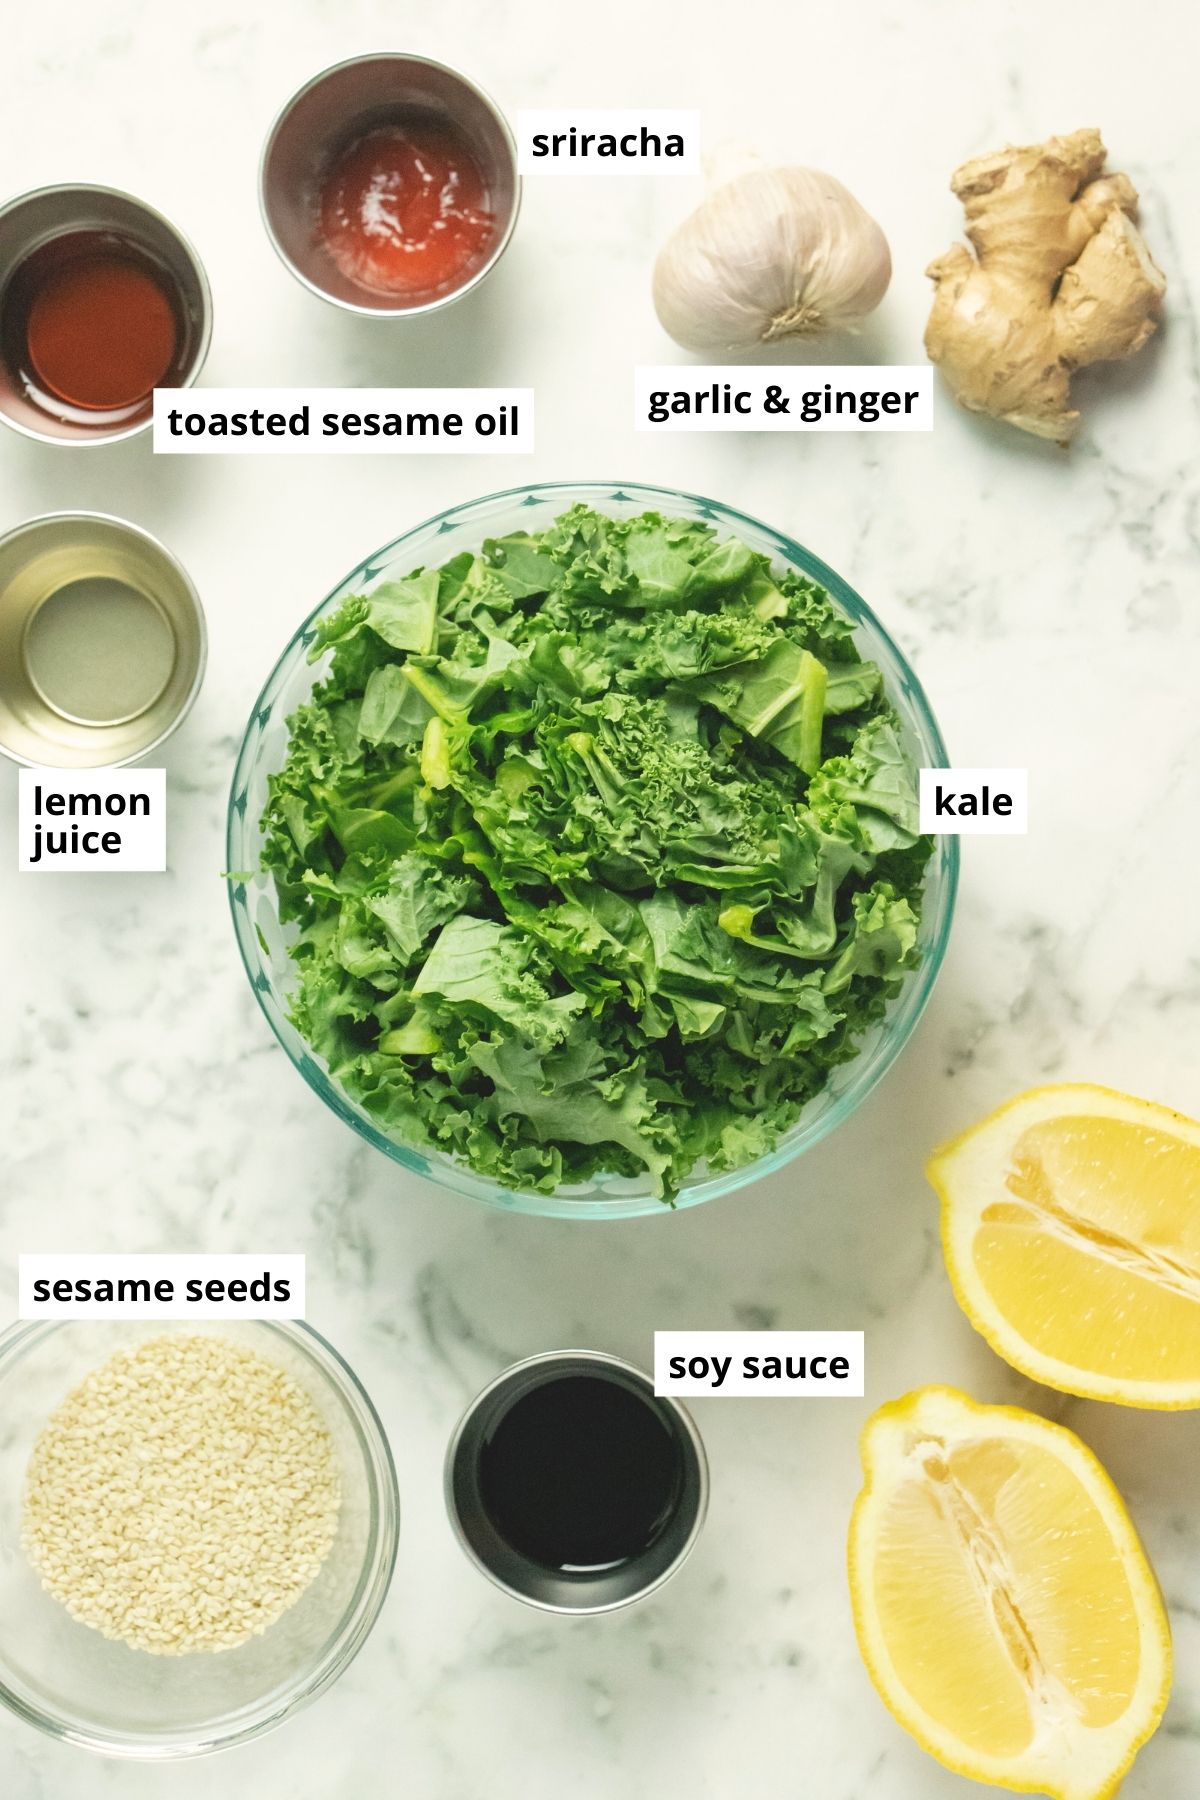 kale, sesame seeds, sesame oil, and seasonings on a white table